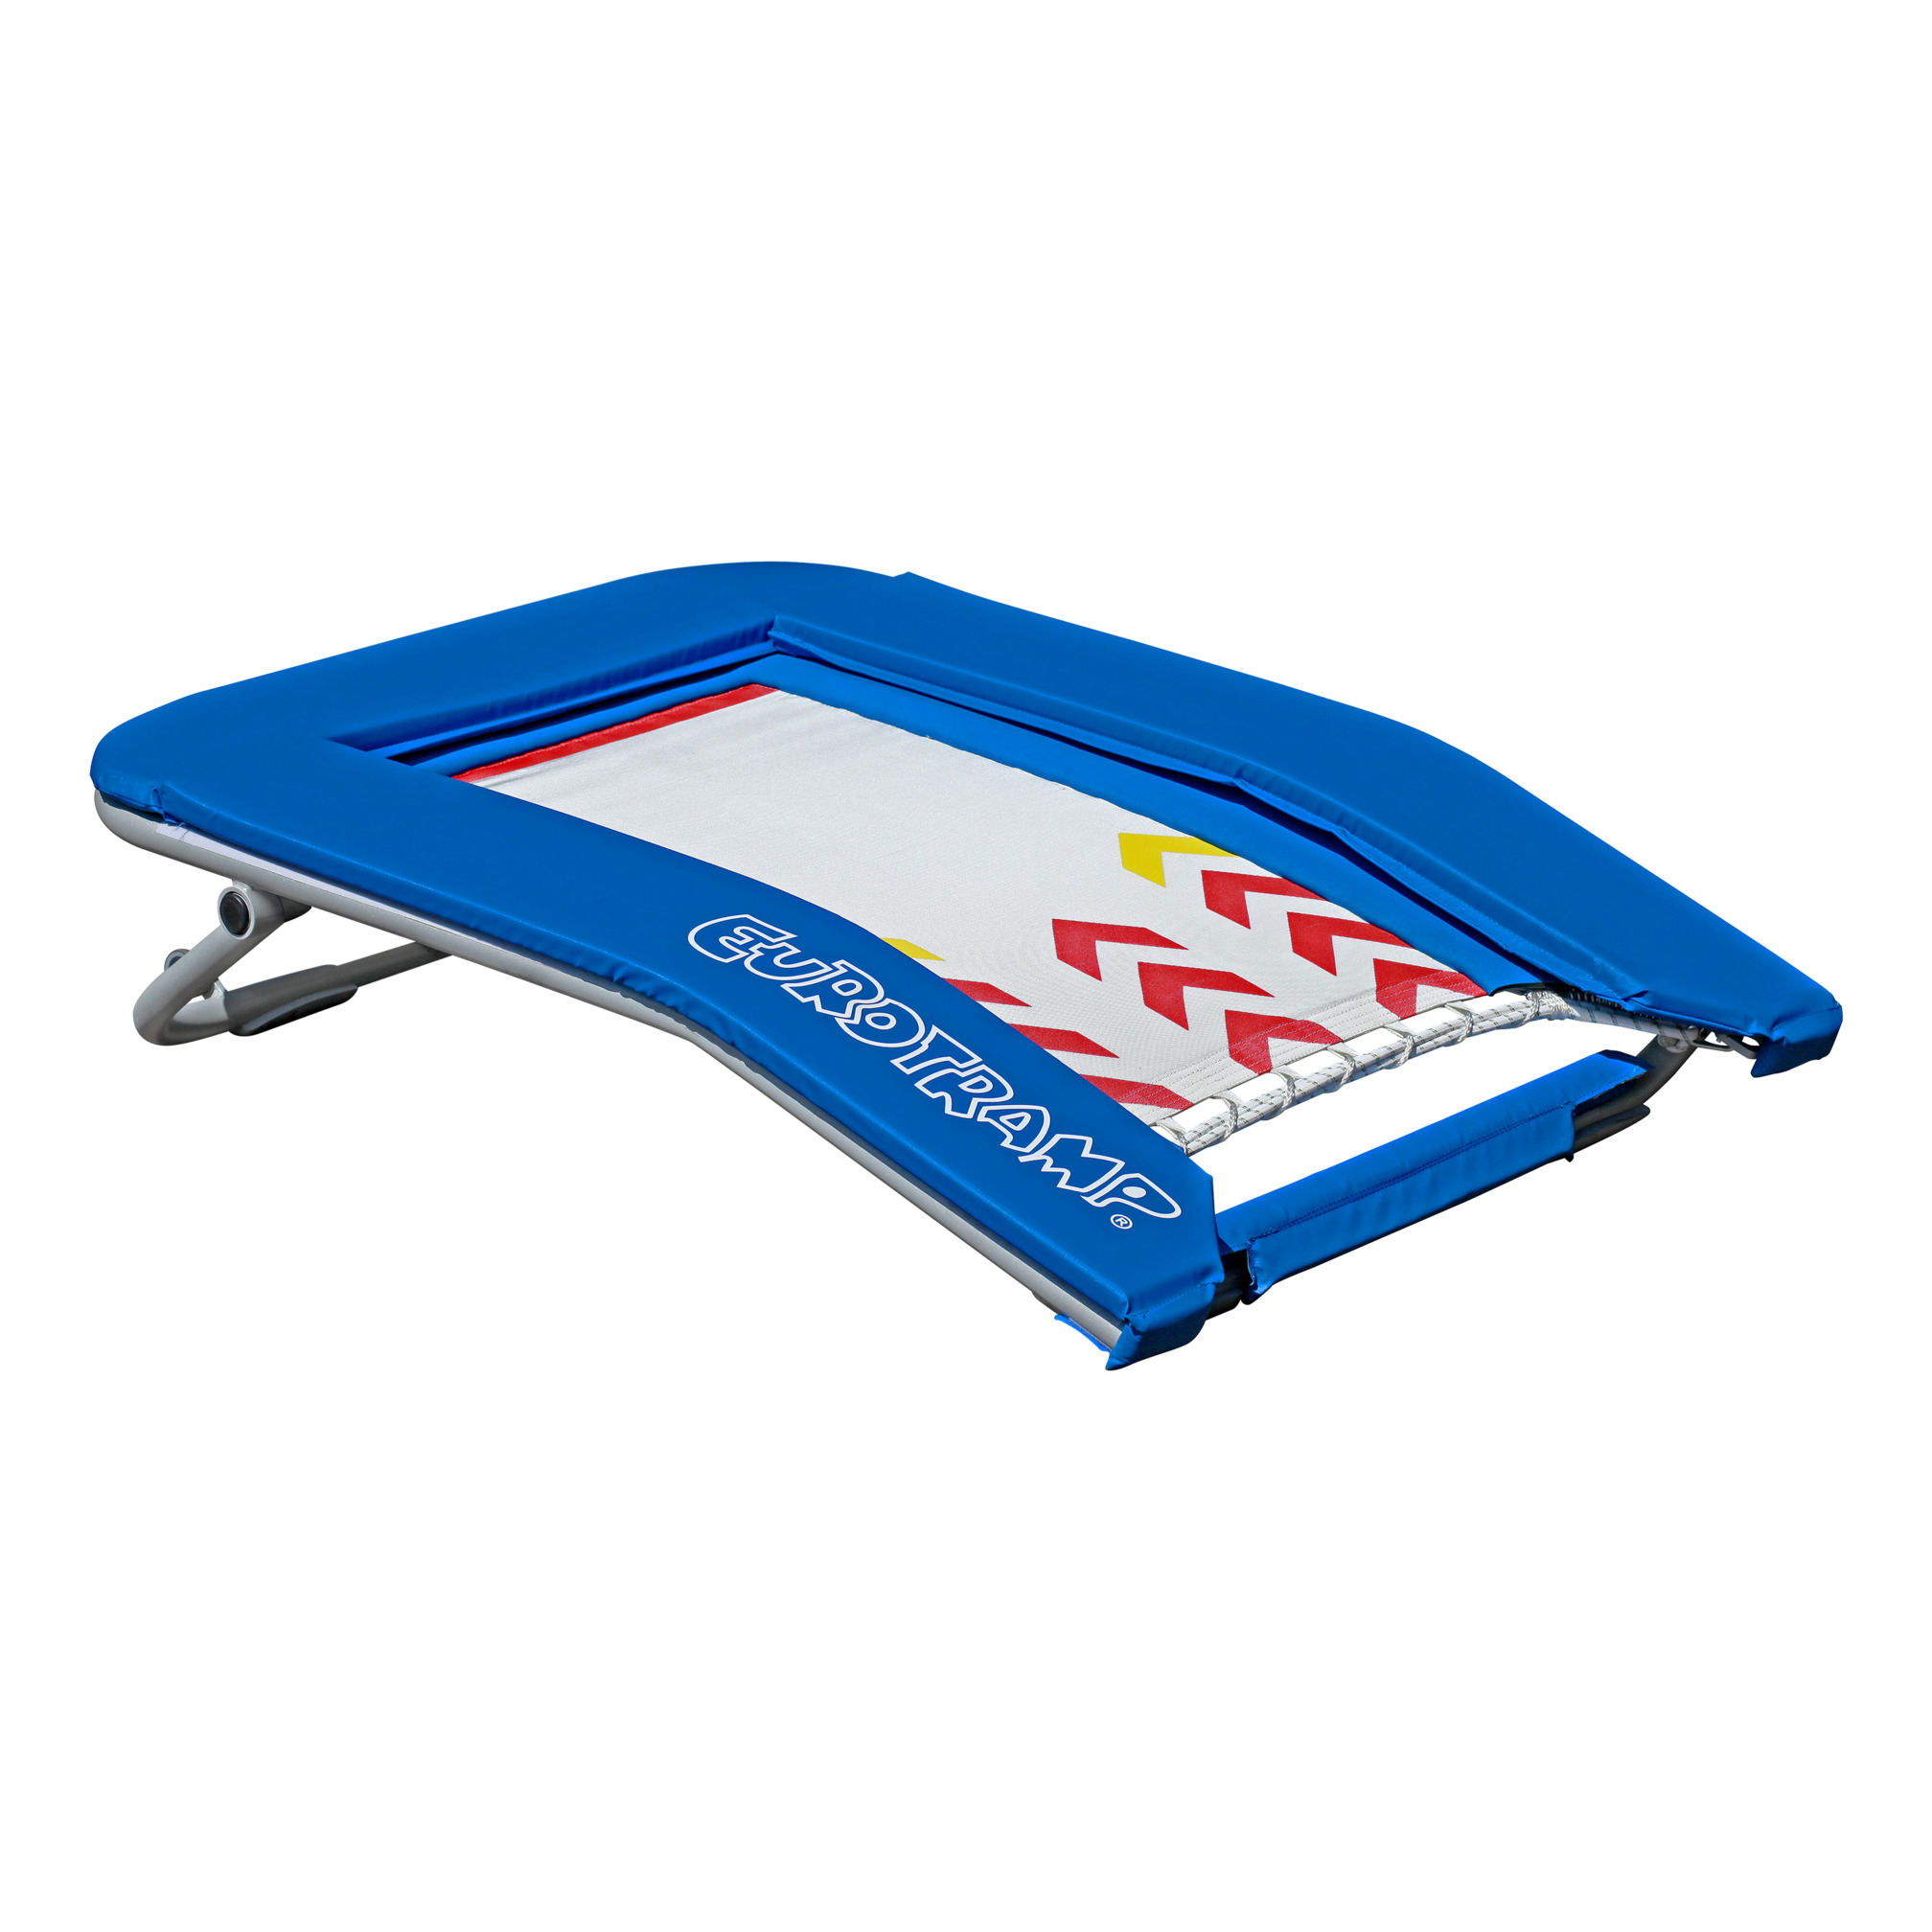 Open-eind trampoline Booster Board